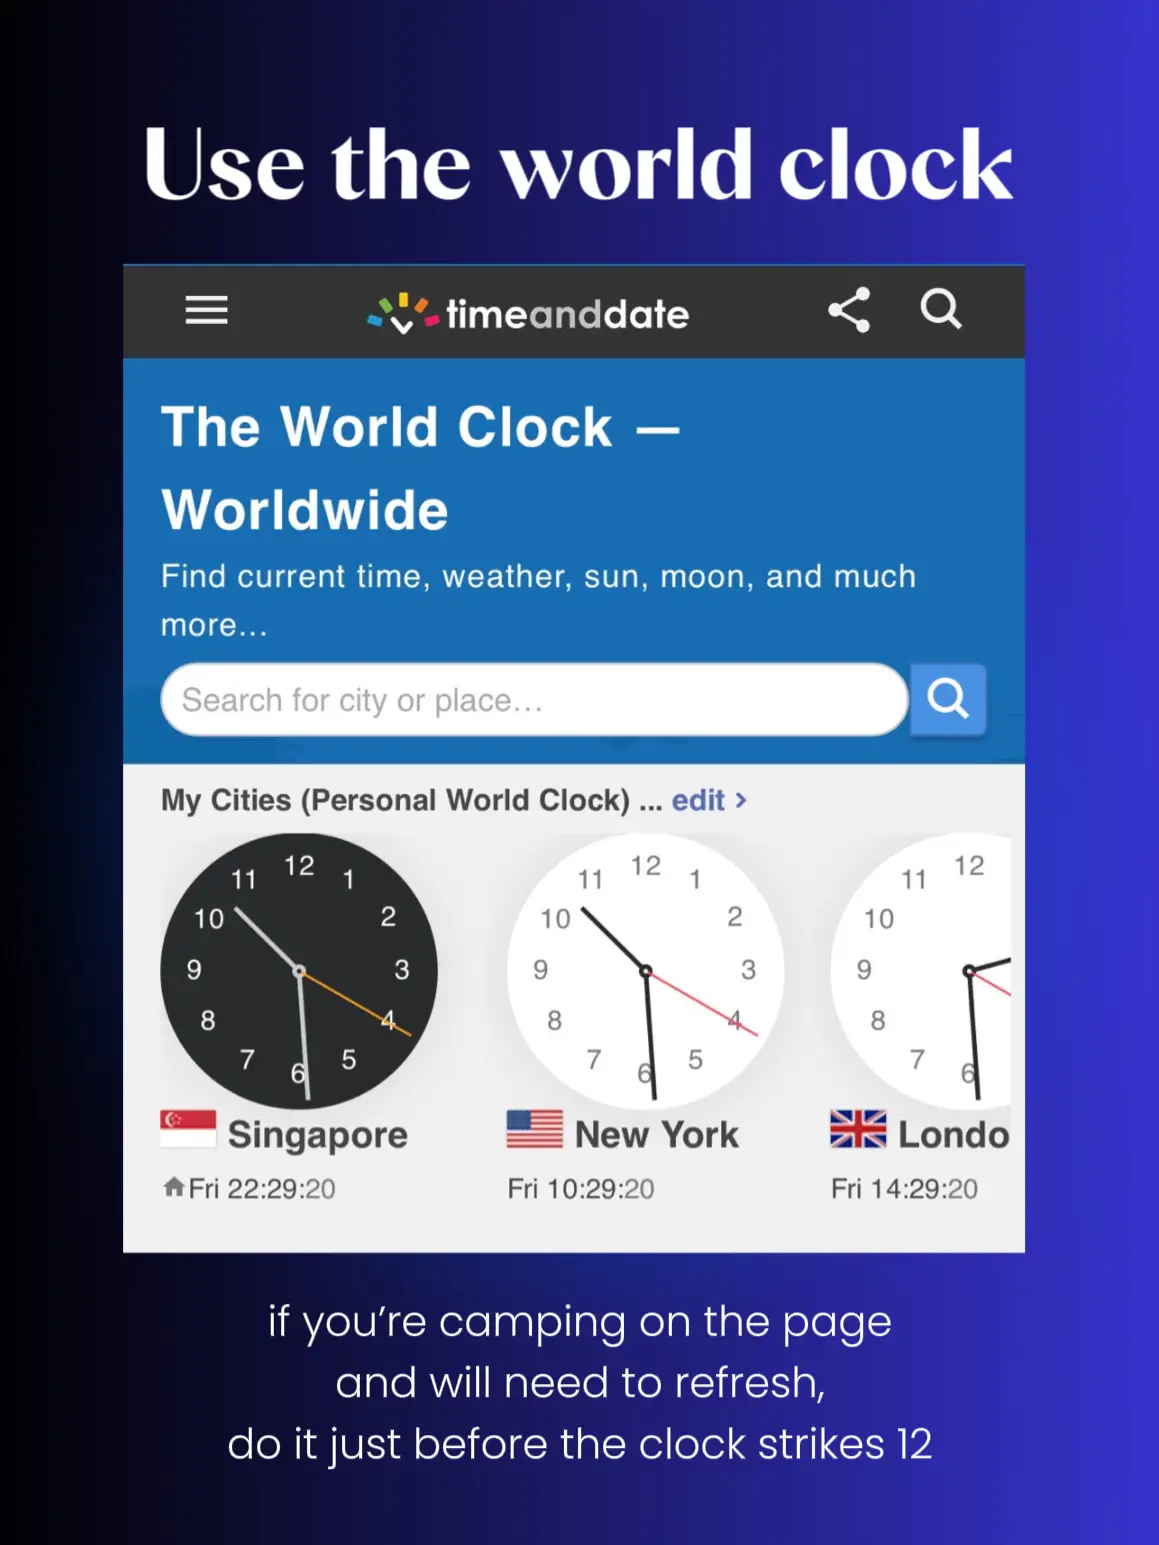 The World Clock — Worldwide